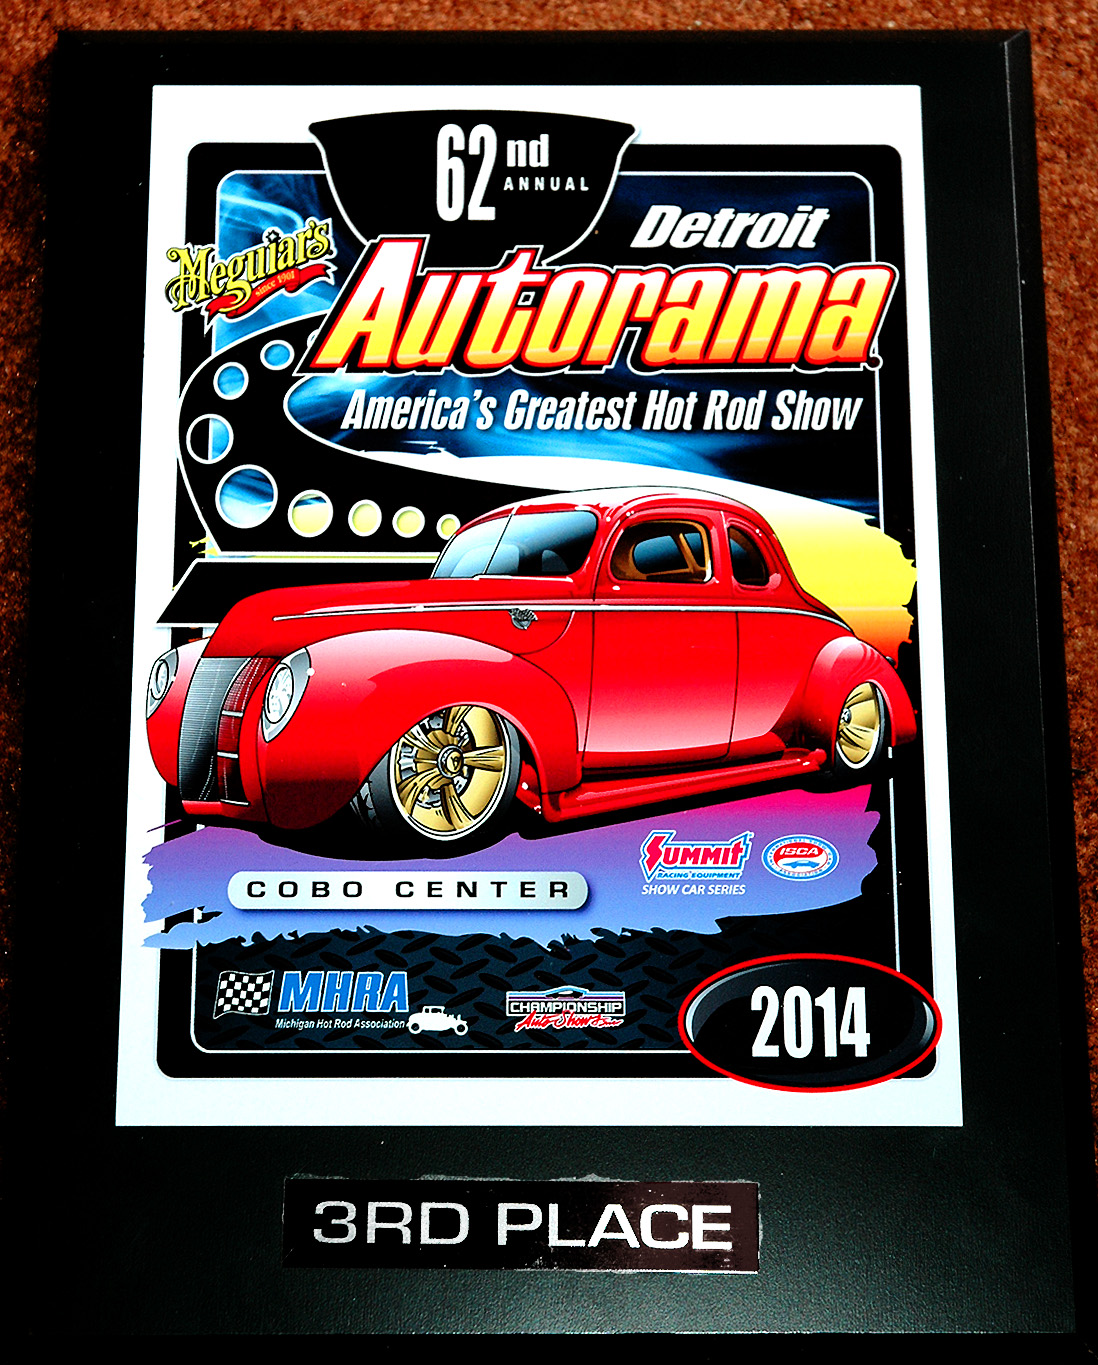 buick-on-display-at-autorama-2014-7116-2014-award-plaque.jpg